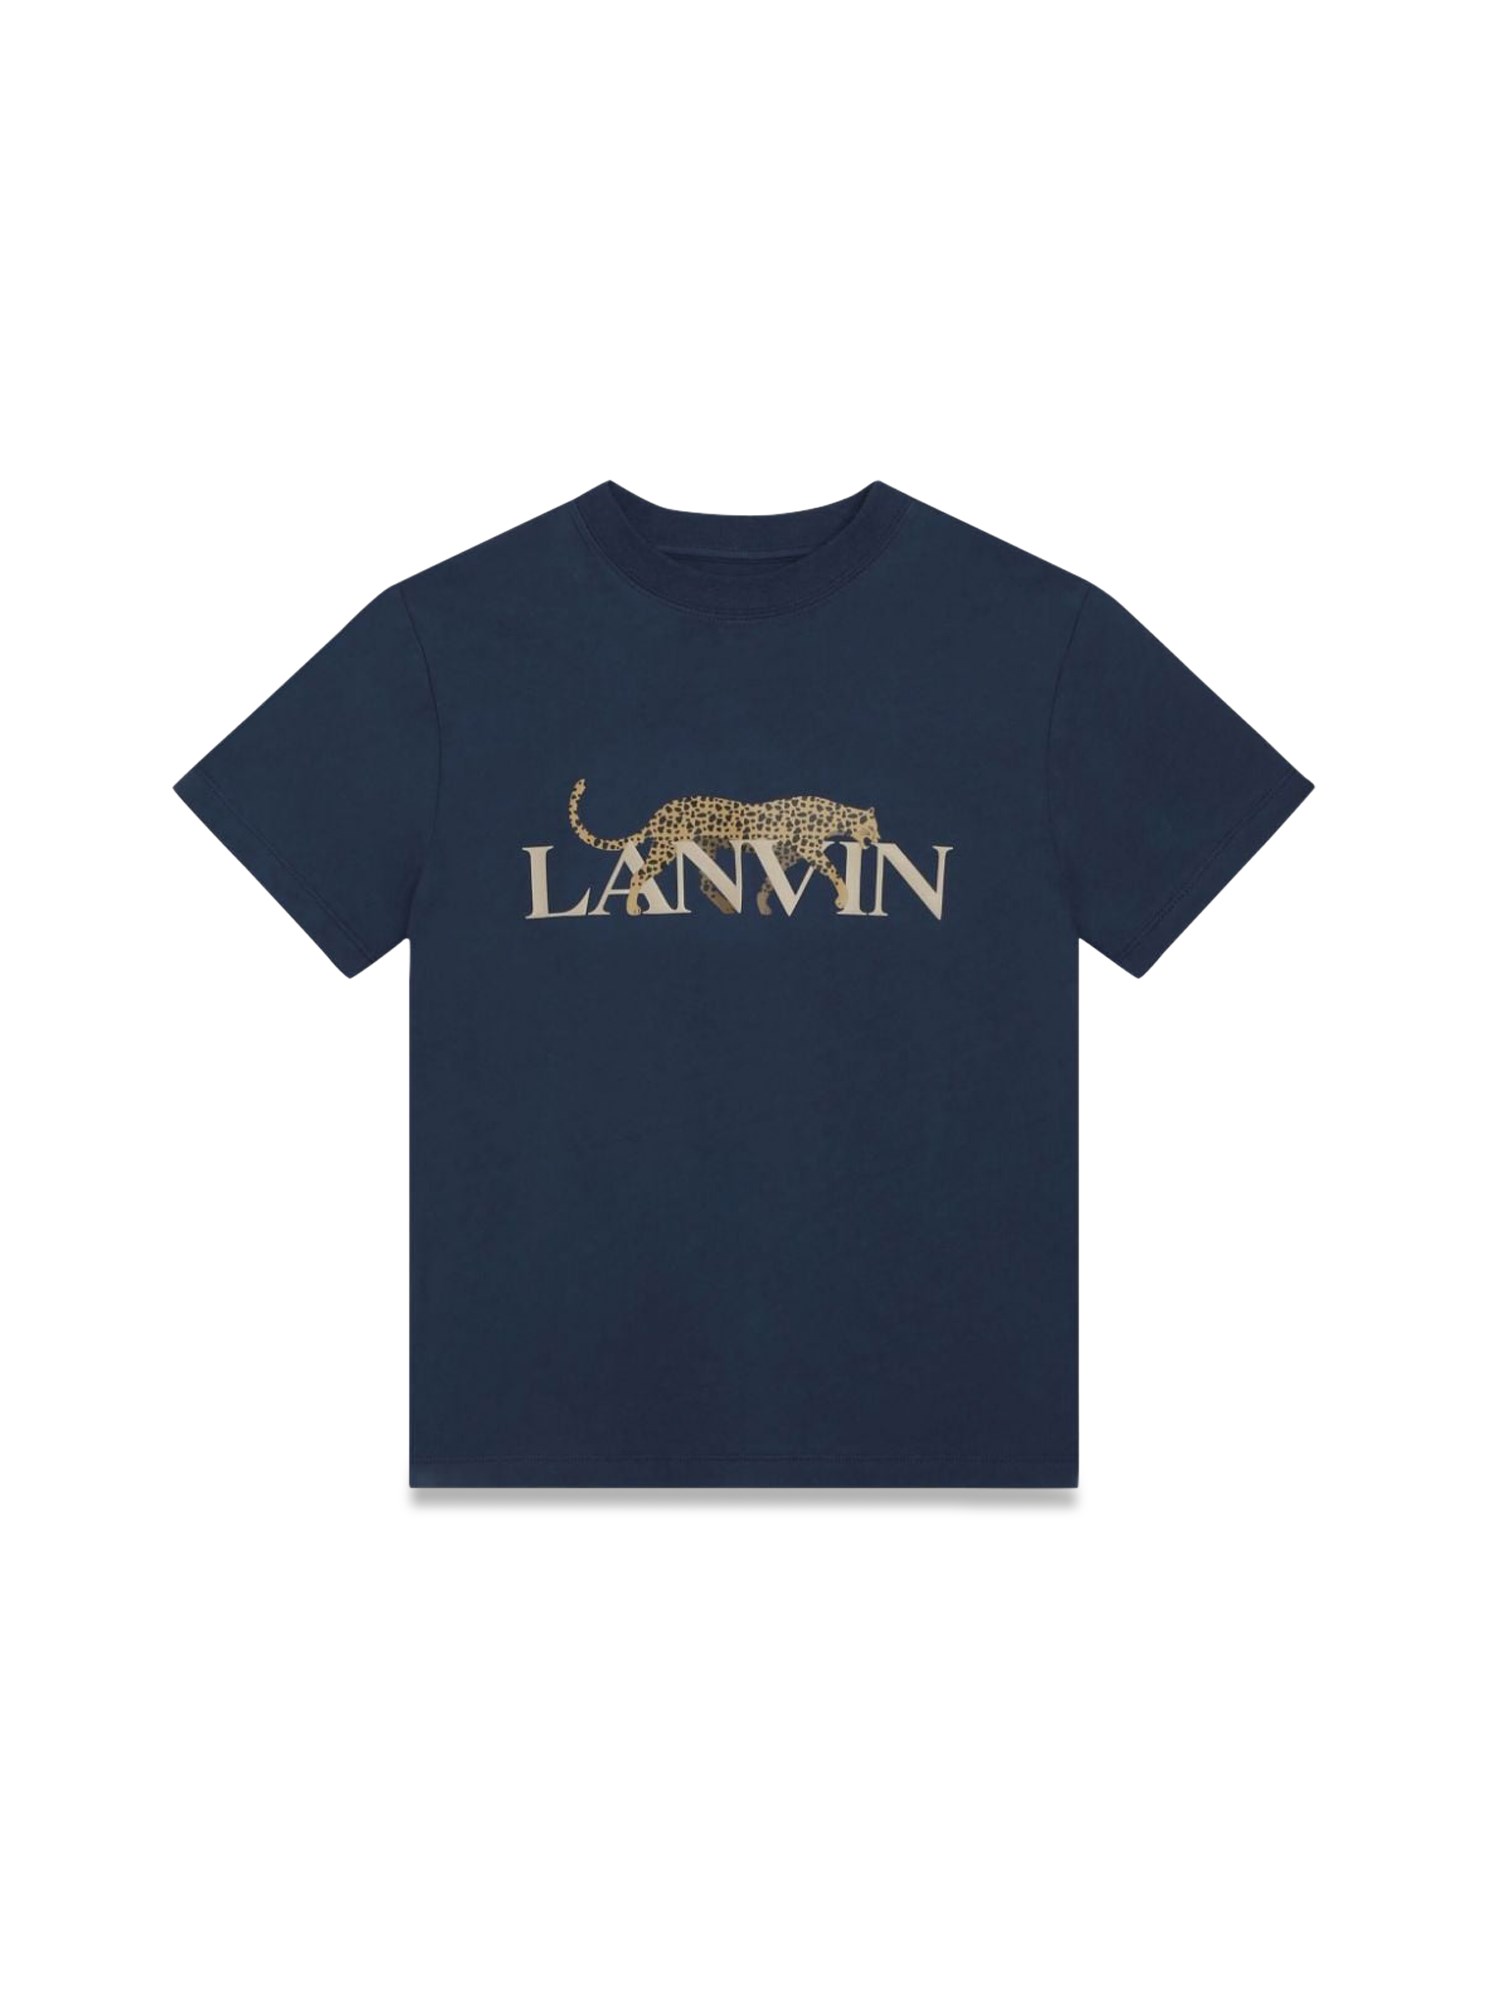 Lanvin lanvin tee shirt